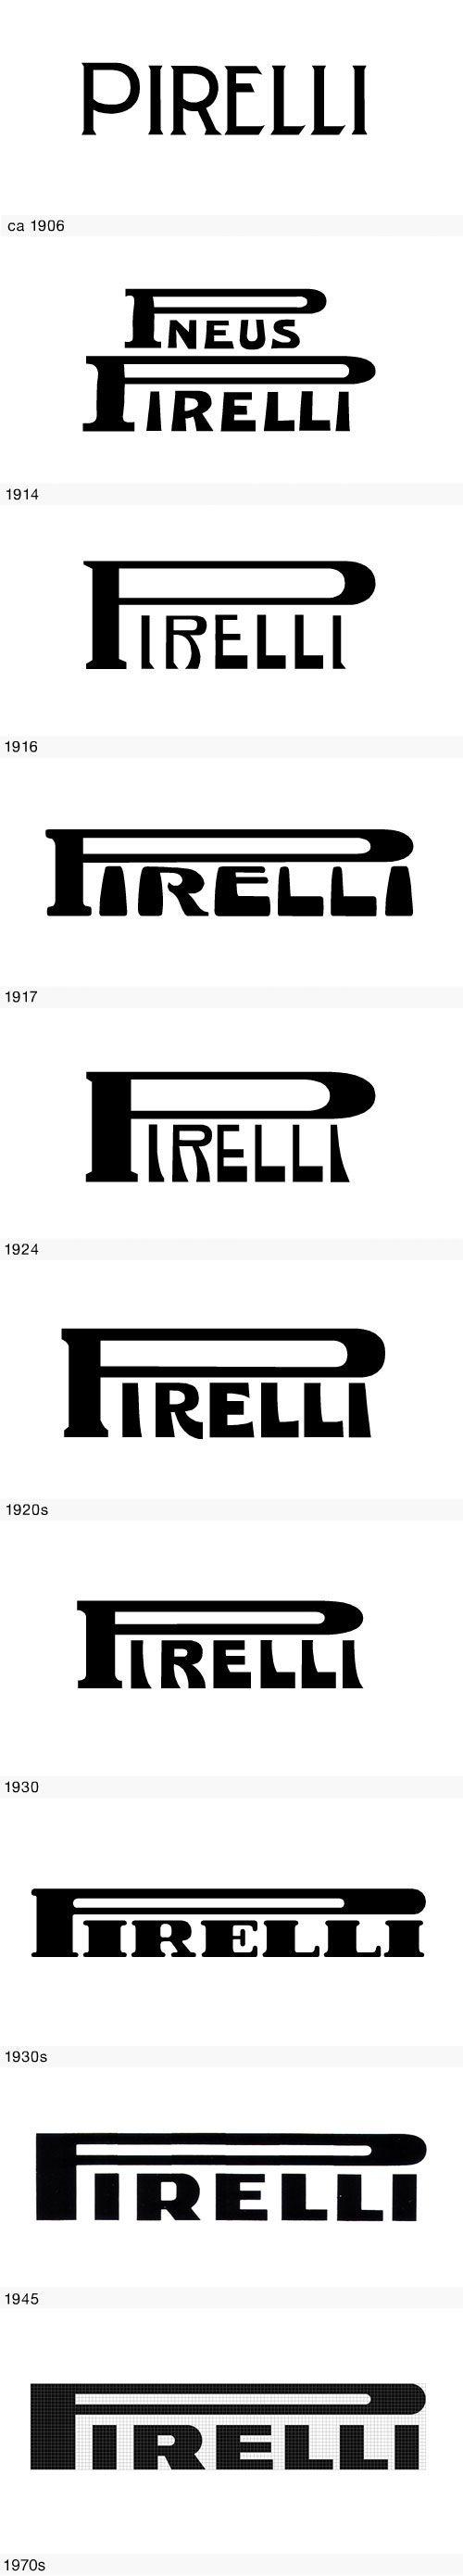 1930s Logo - Pirelli logo evolution | Logo Design Love